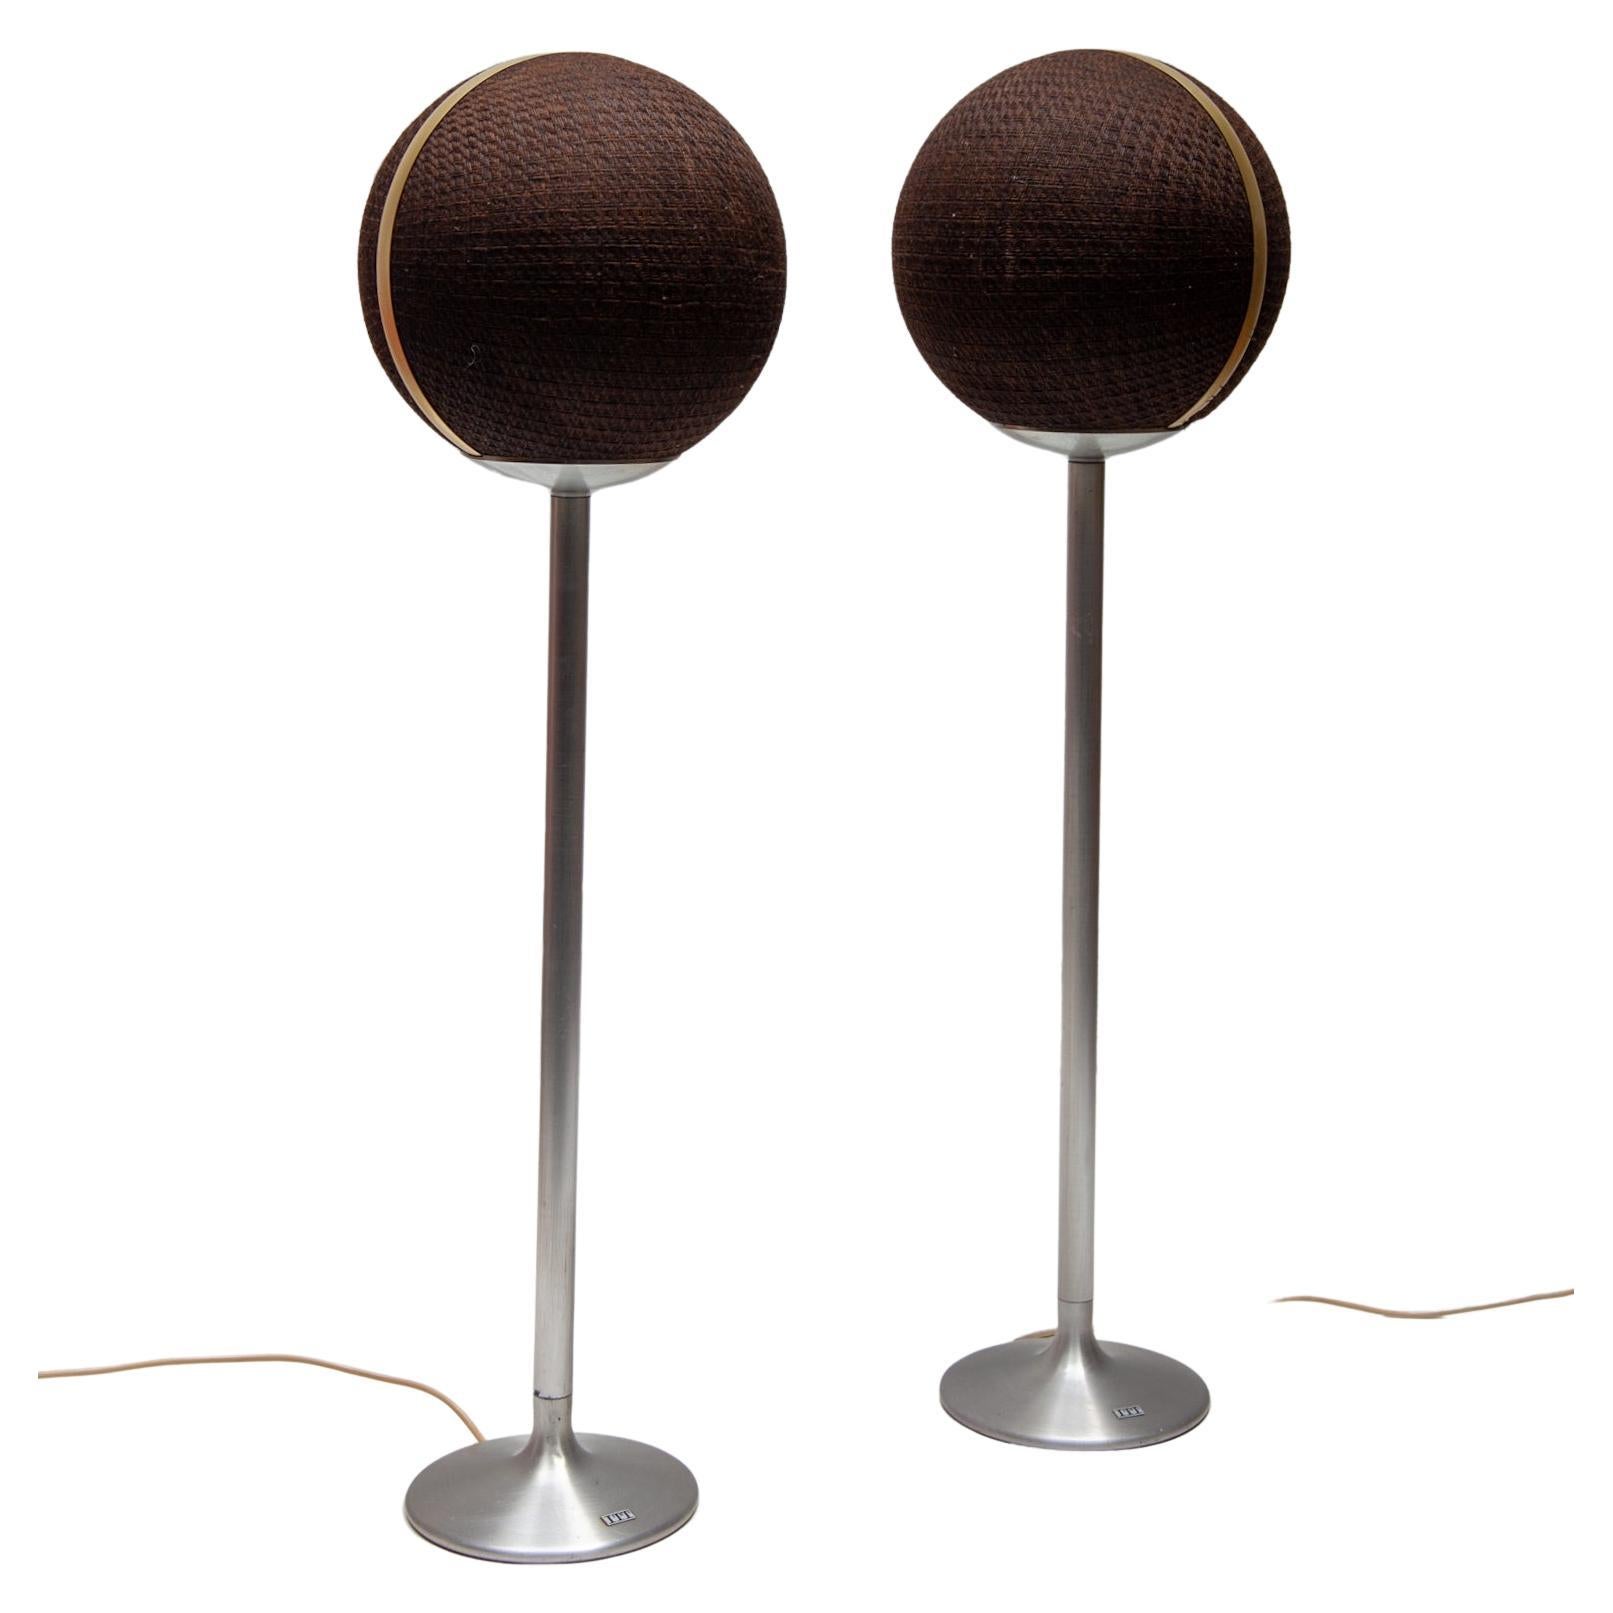 Set Korona K1-70 70 watts Spherical Stand Speakers ITT Schaub Lorenz, 1970s For Sale